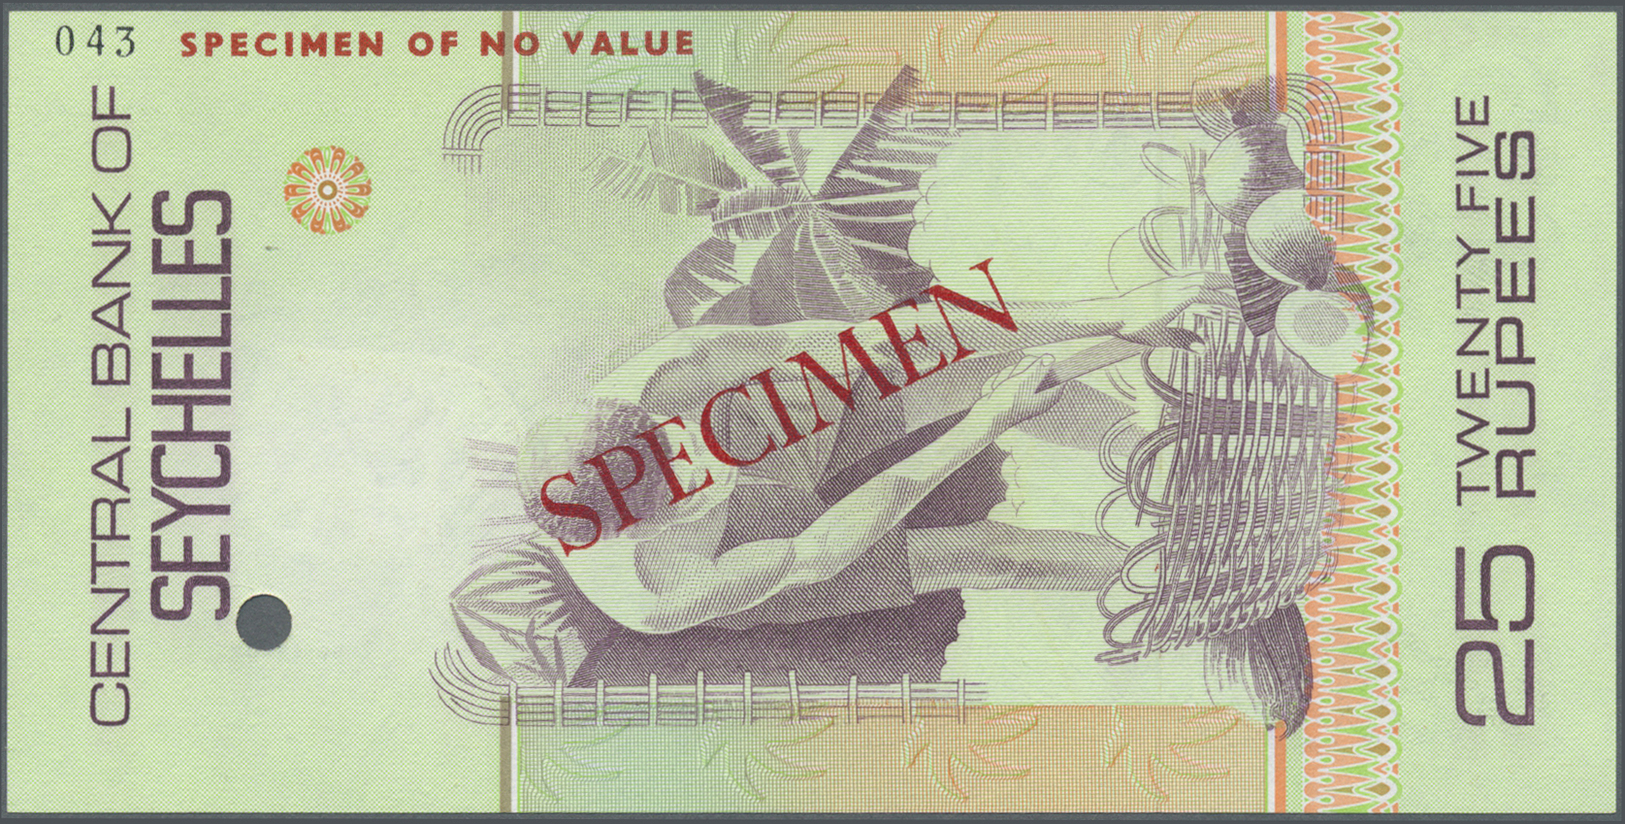 02899 Seychelles / Seychellen: 25 Rupees ND Specimen Proof P. 29s In Condition: UNC. - Seychelles